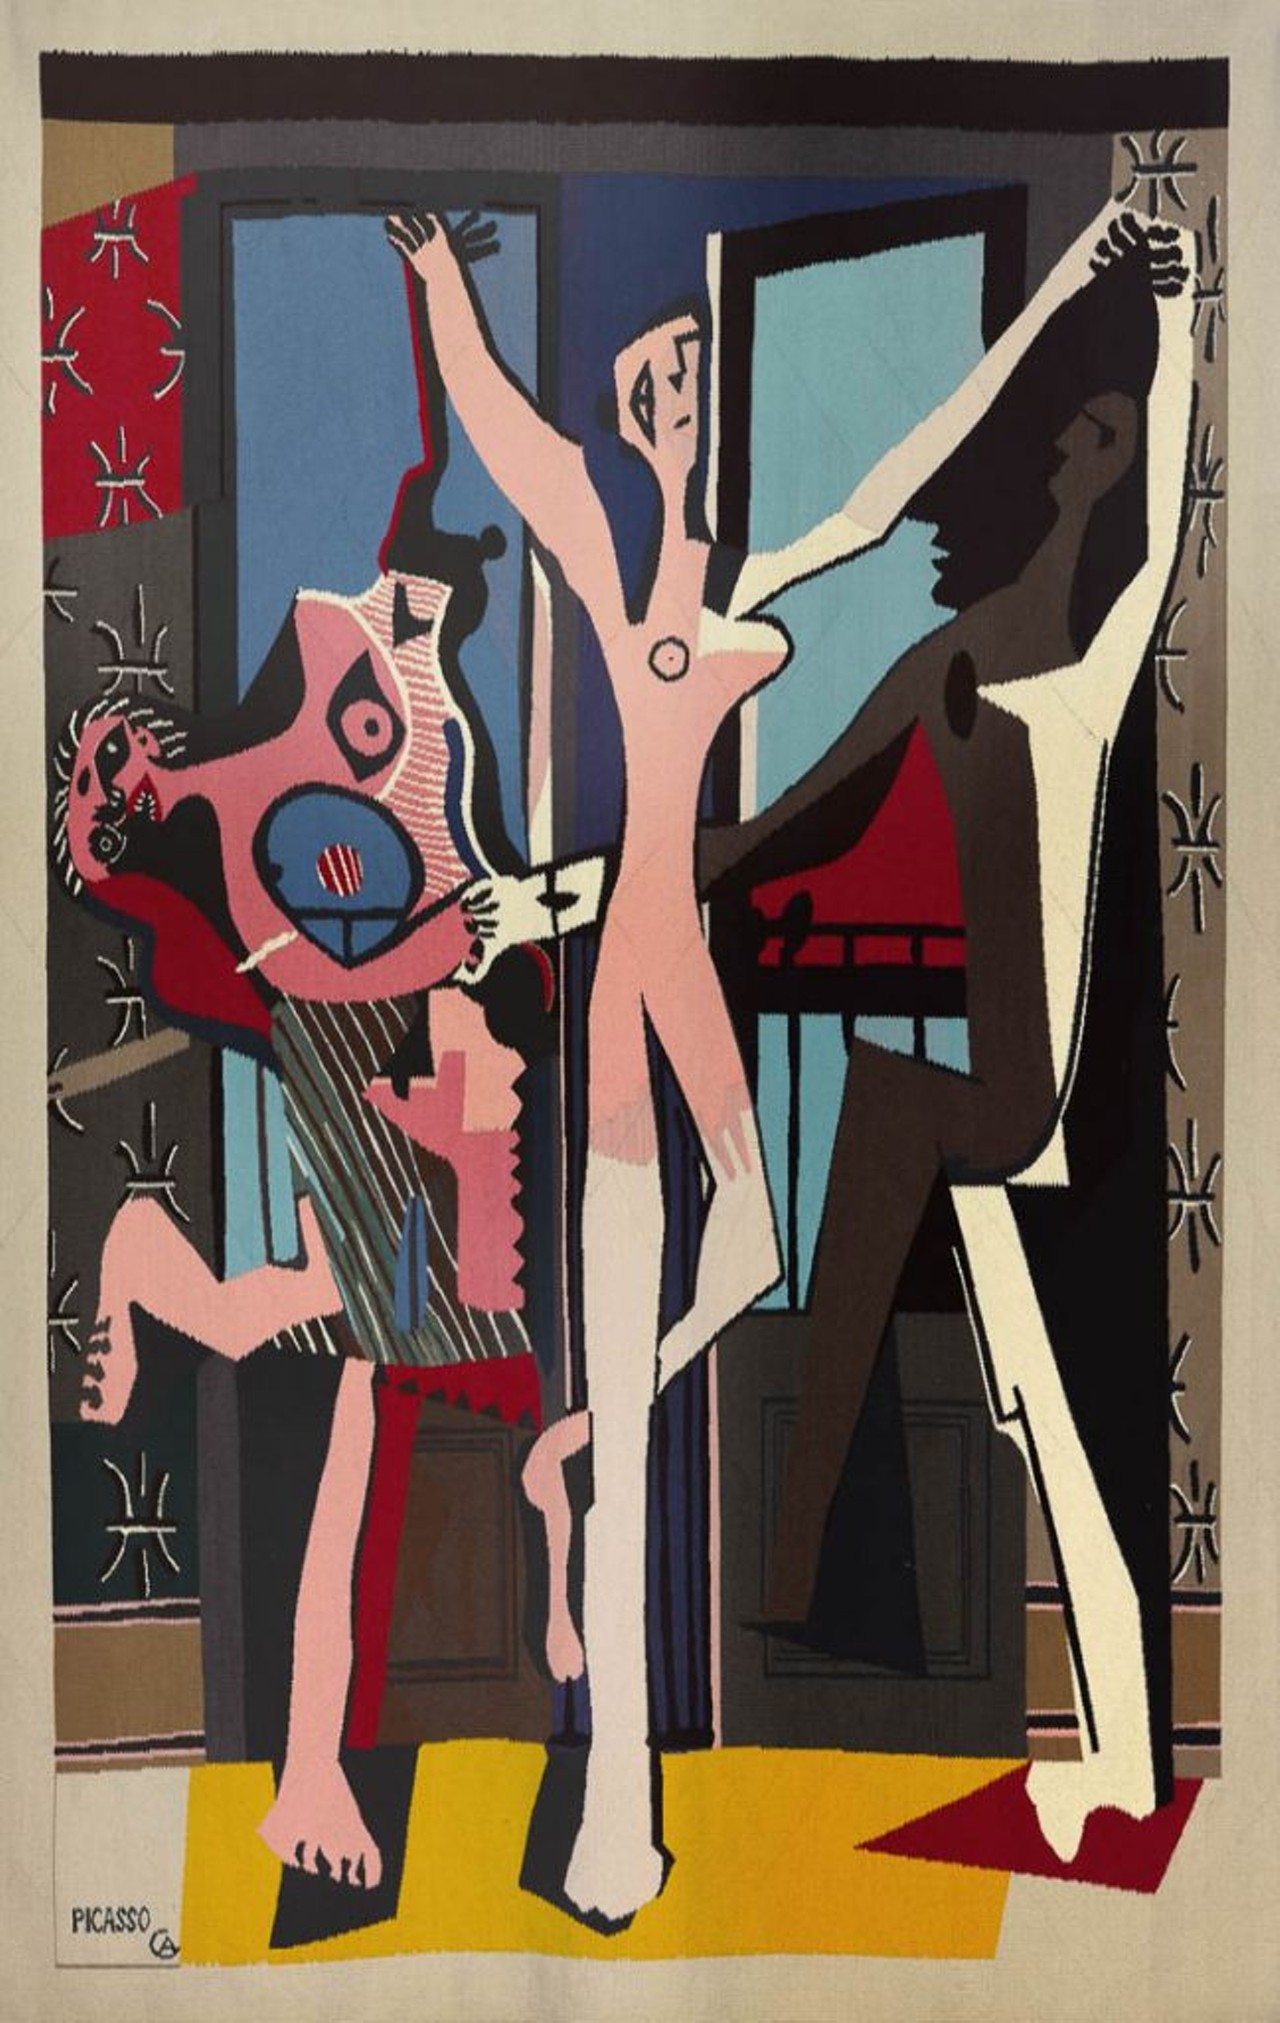 
After The Three Dancers (Les Trois Deanseuses), 1925